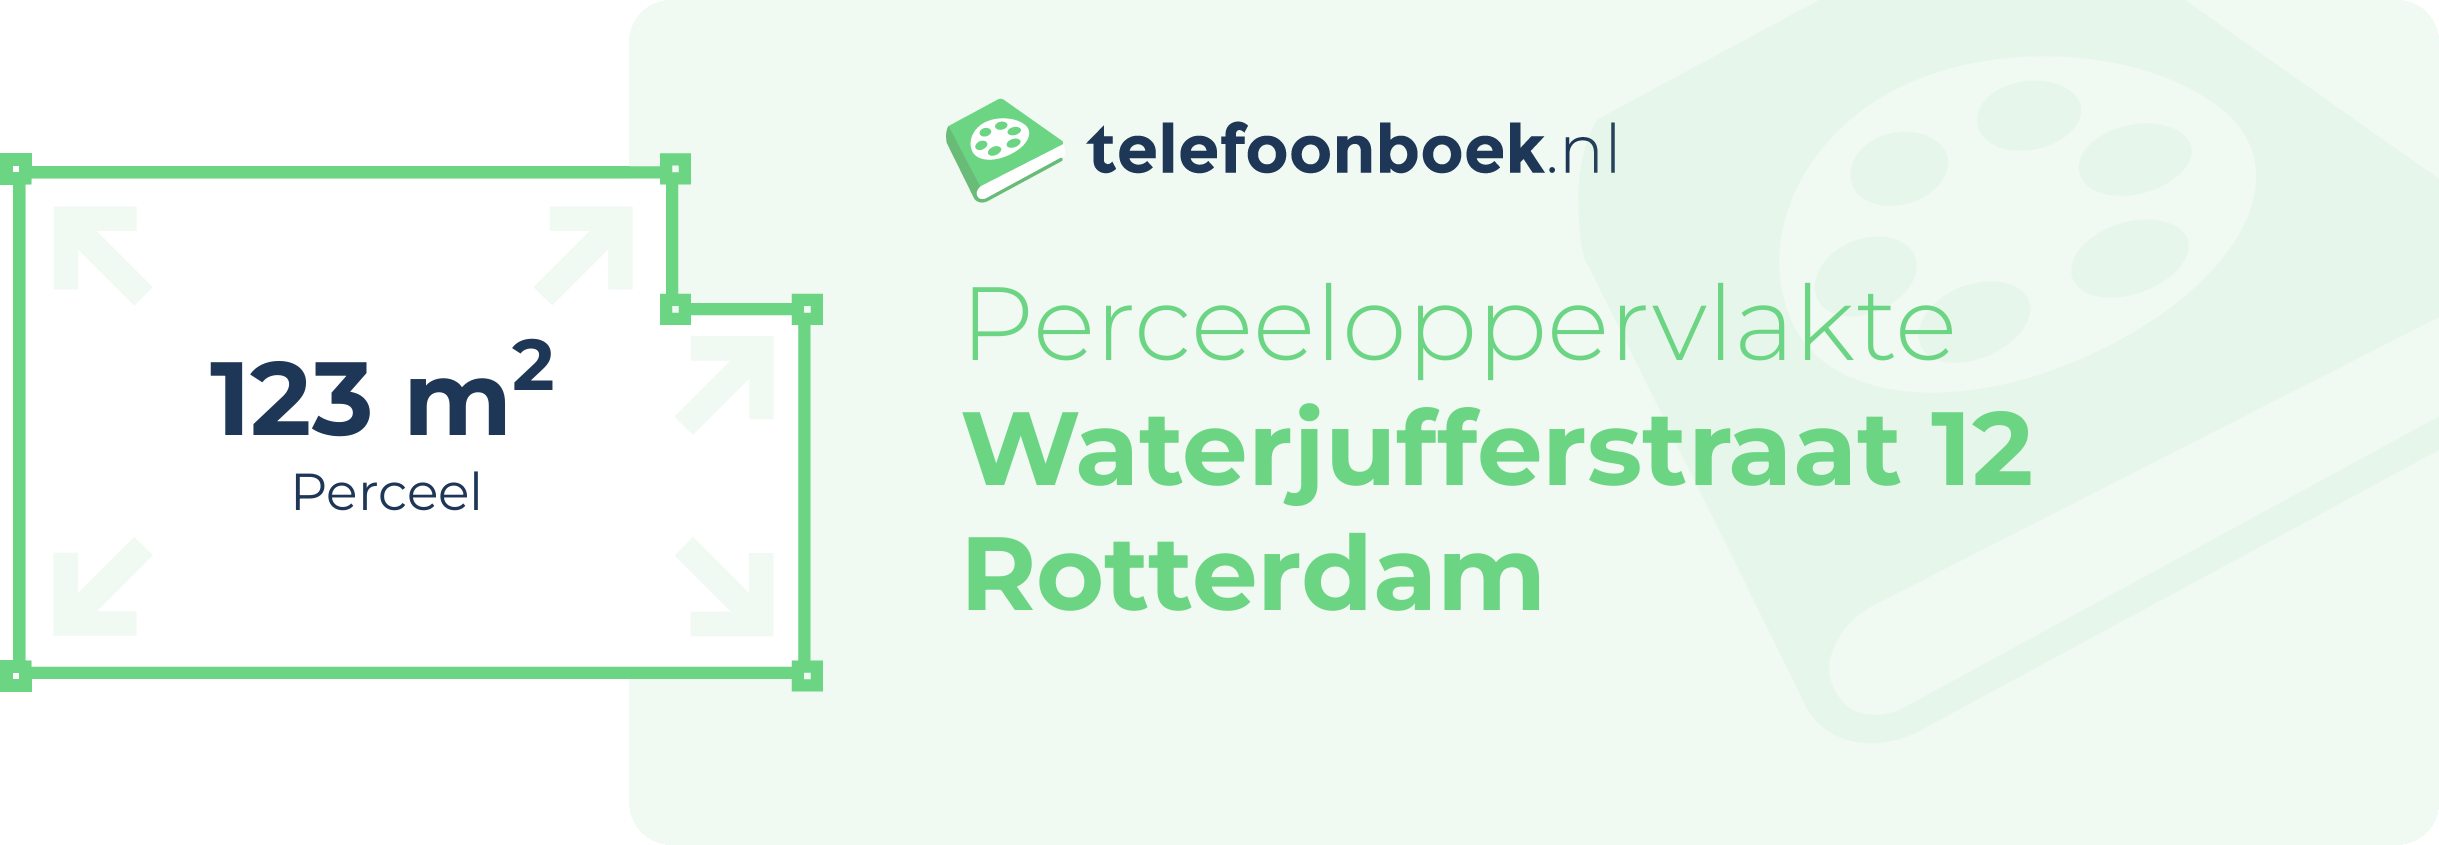 Perceeloppervlakte Waterjufferstraat 12 Rotterdam